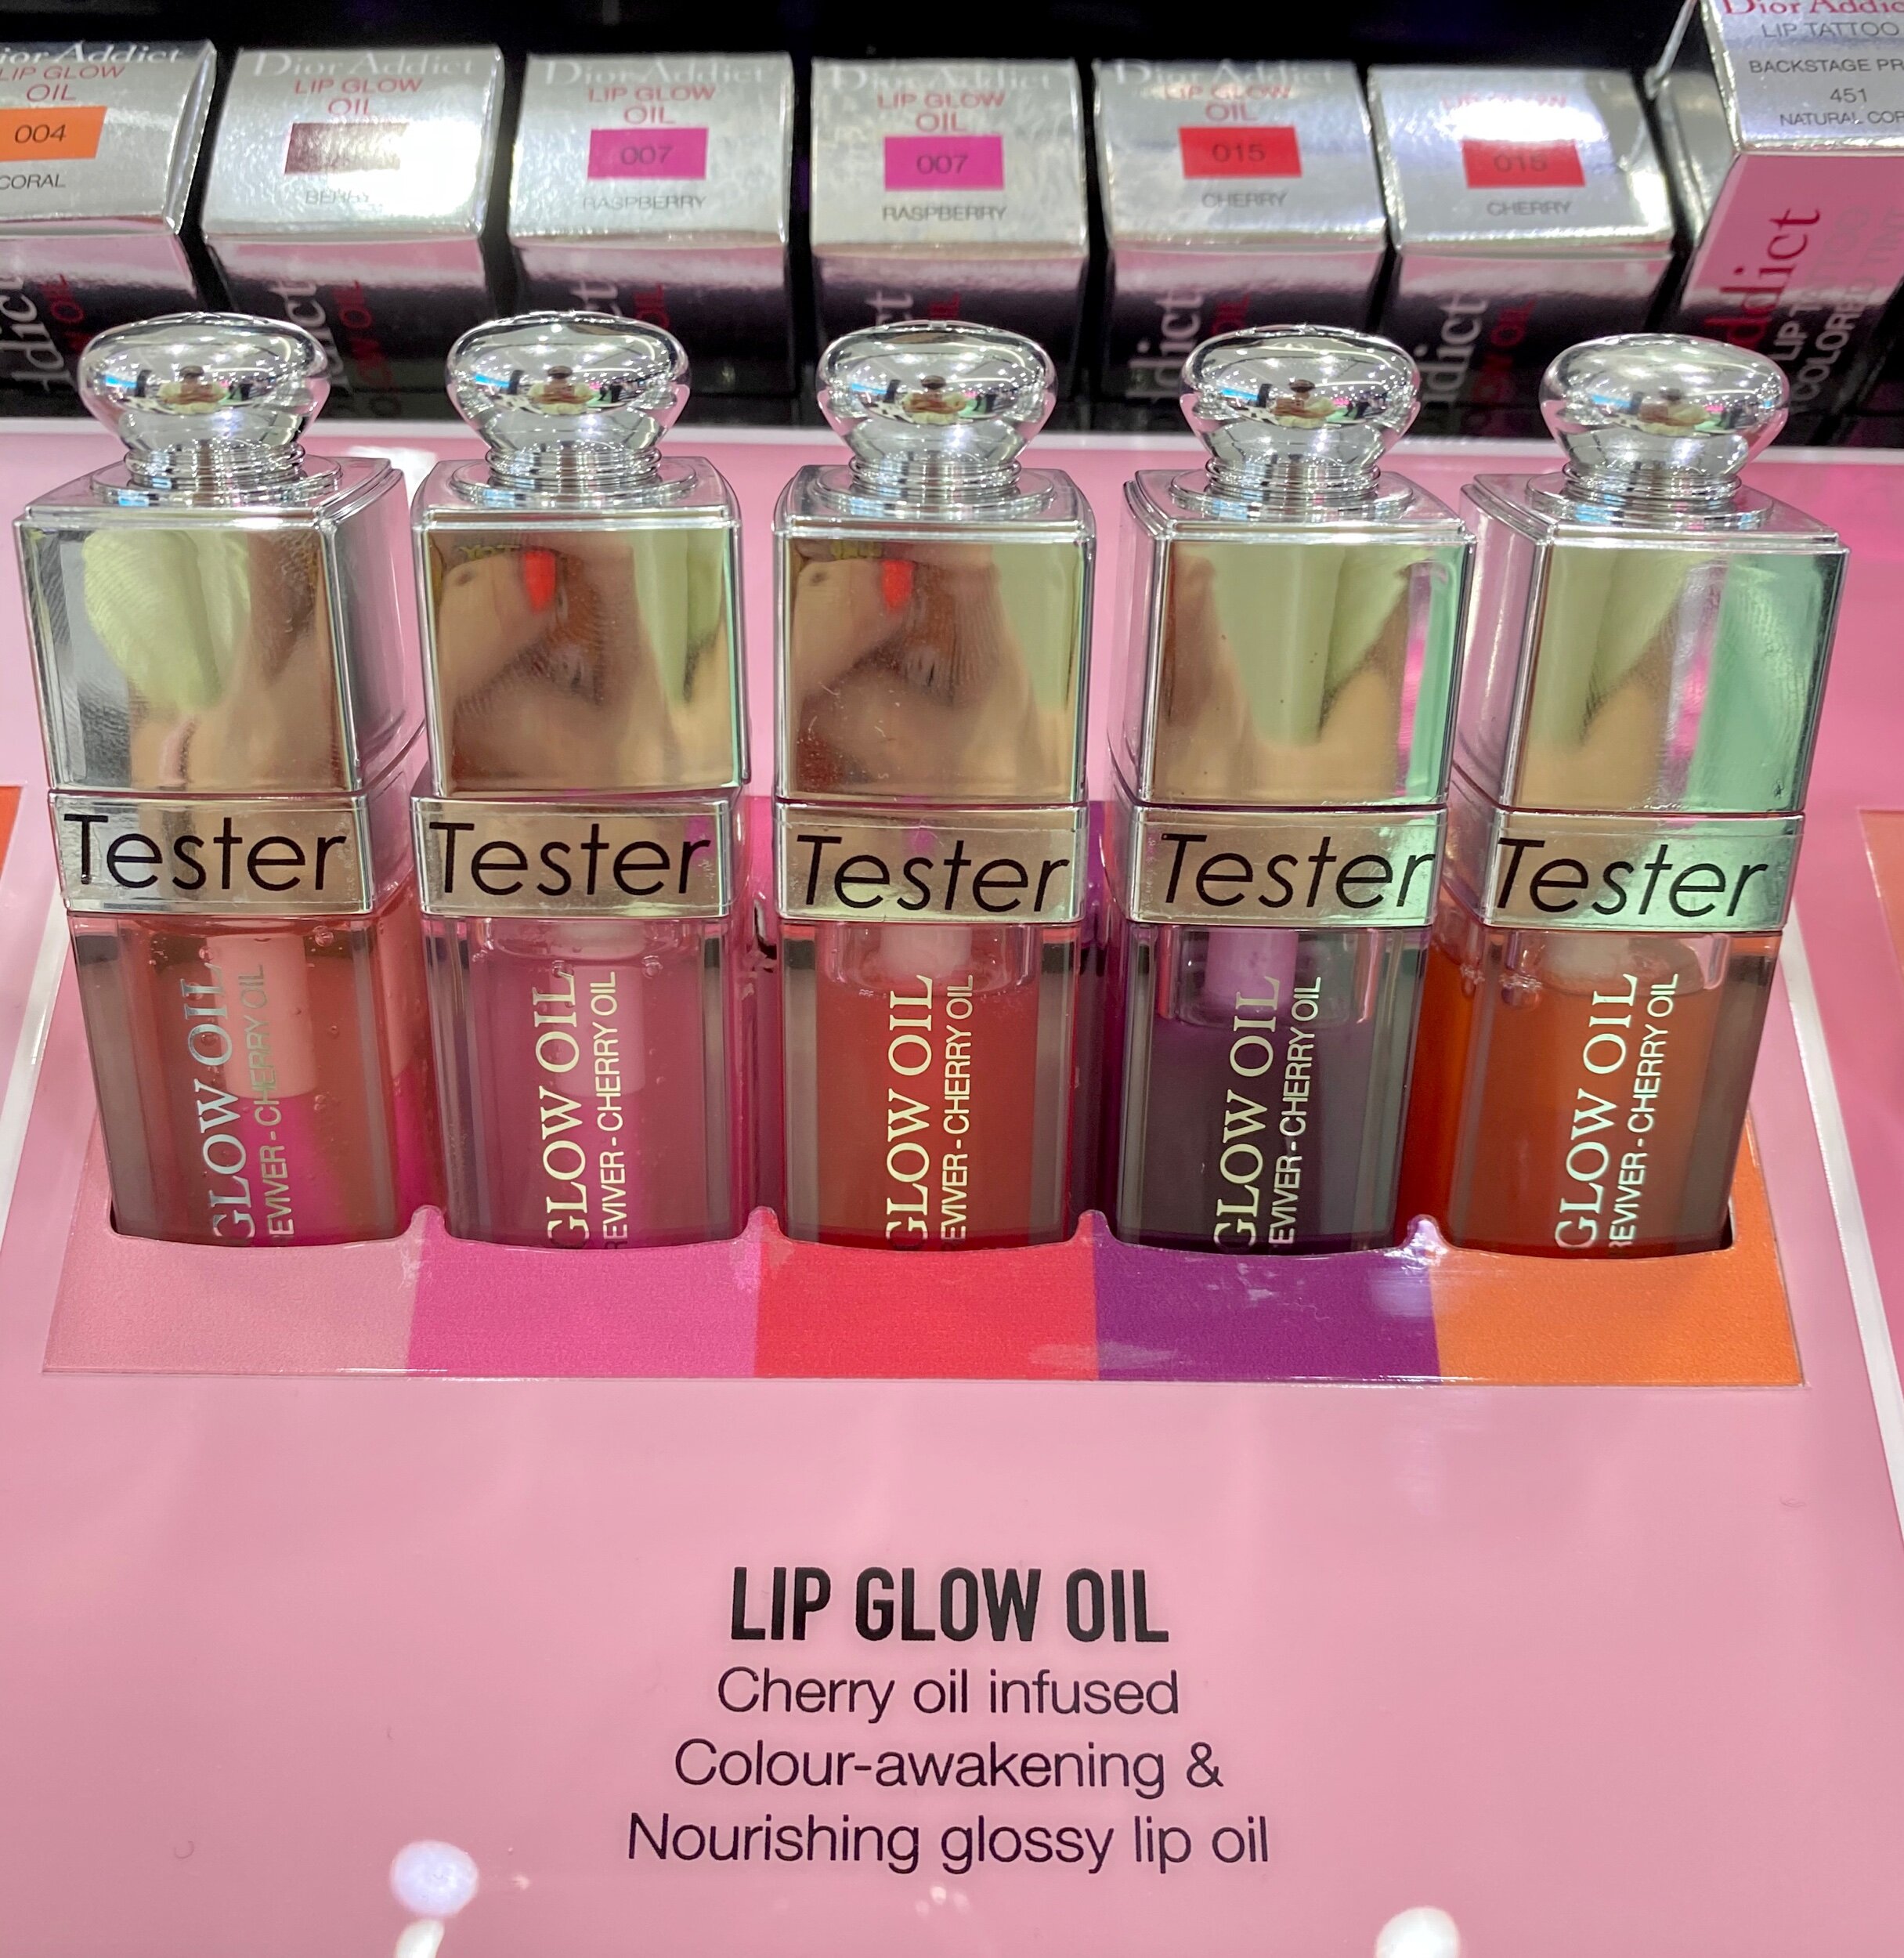 Dior Addict Lip Glow Oil Berry munimoro.gob.pe